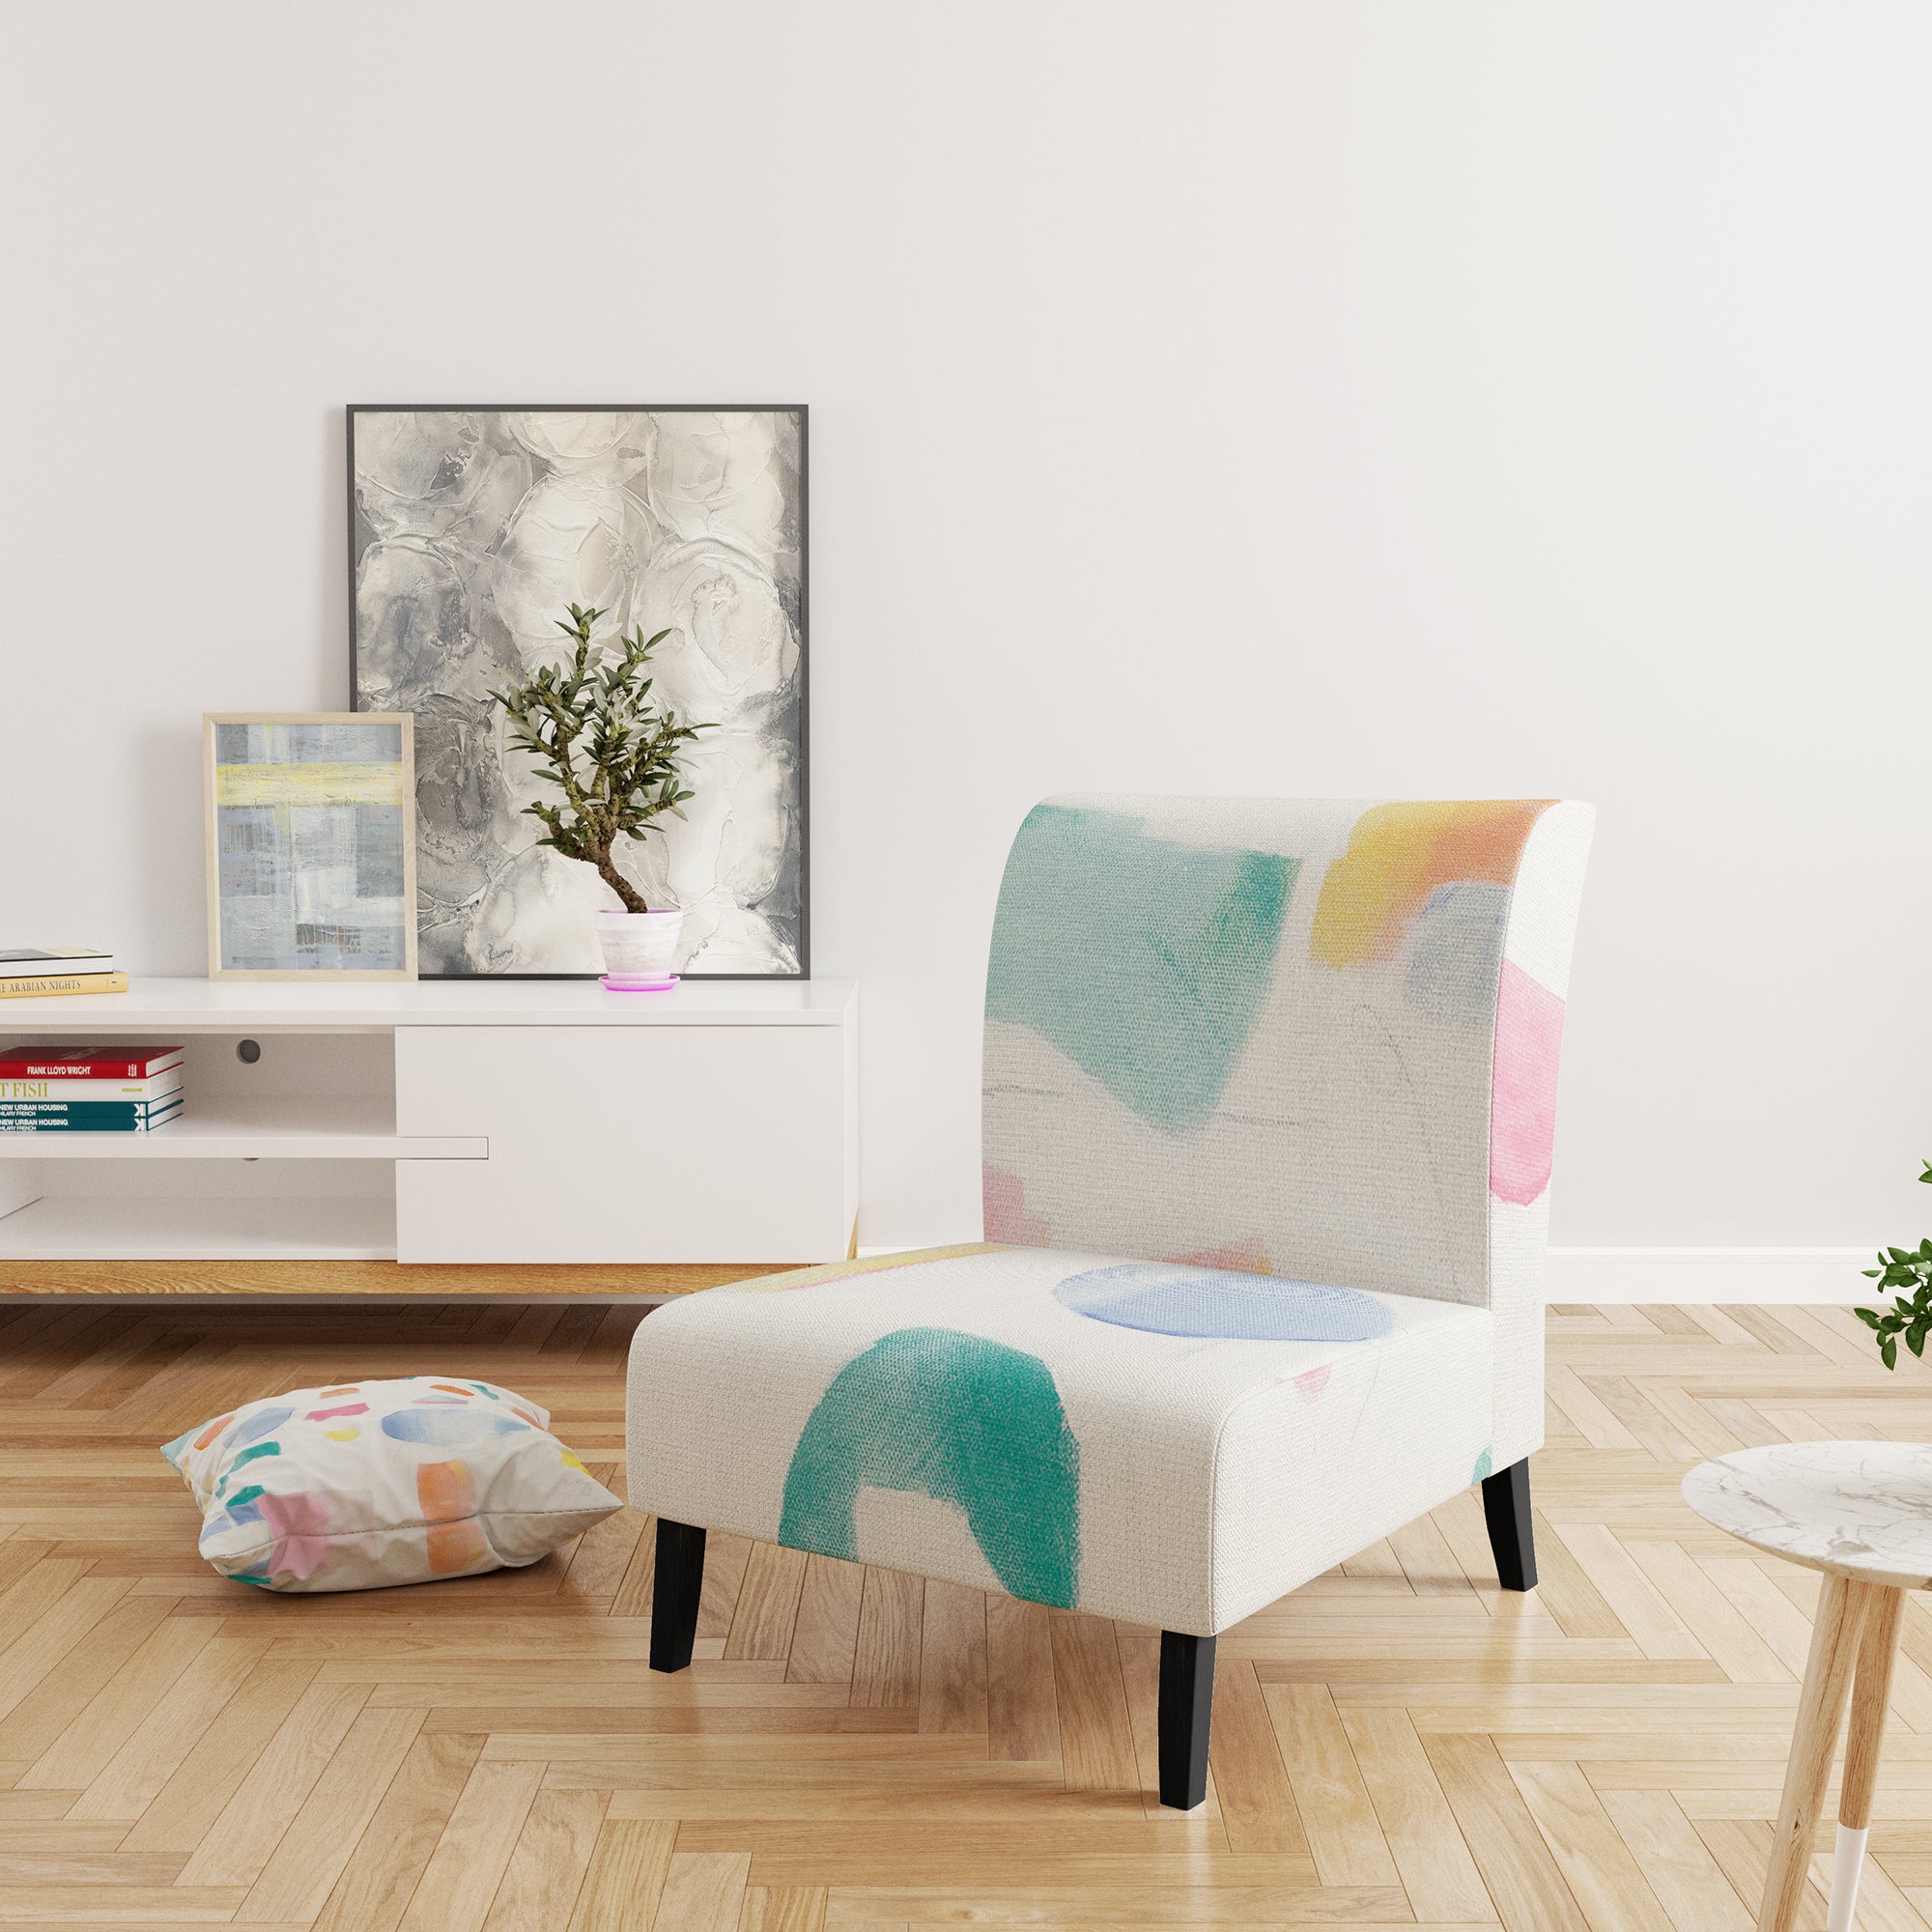 Joy Geometric Simple Mid-Century Accent Chair